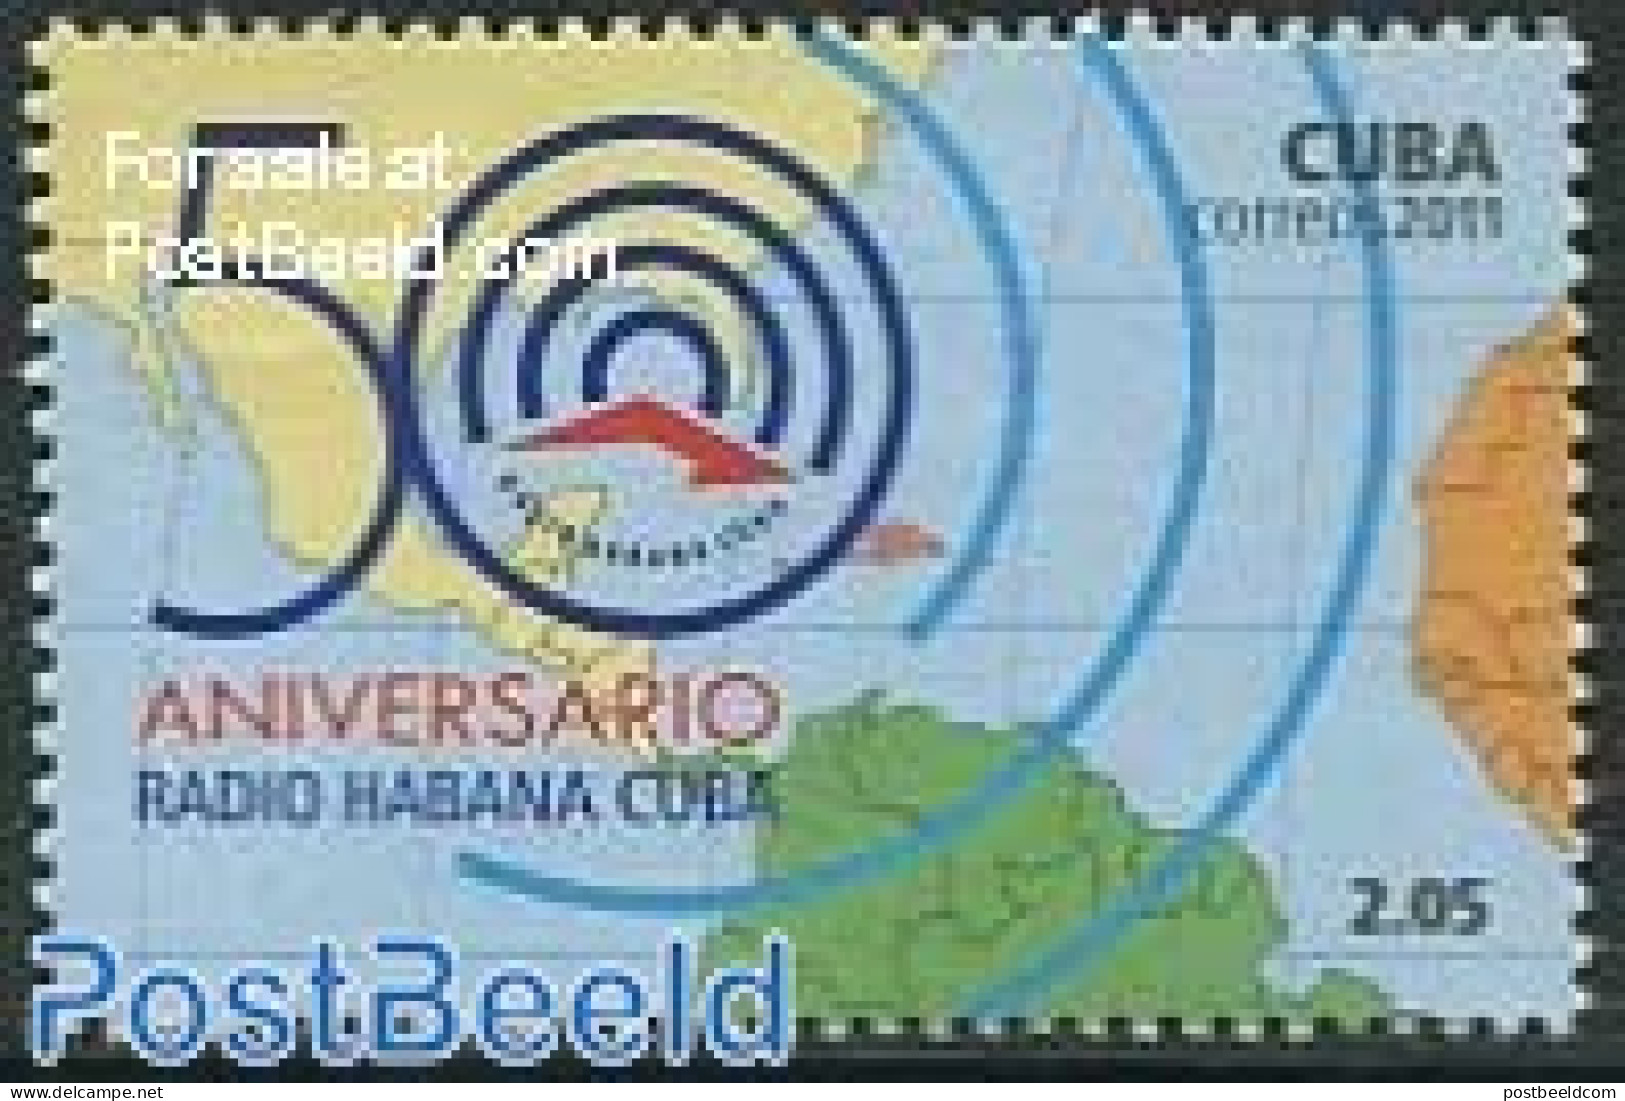 Cuba 2011 50 Years Radio Habana 1v, Mint NH, Performance Art - Various - Radio And Television - Maps - Neufs